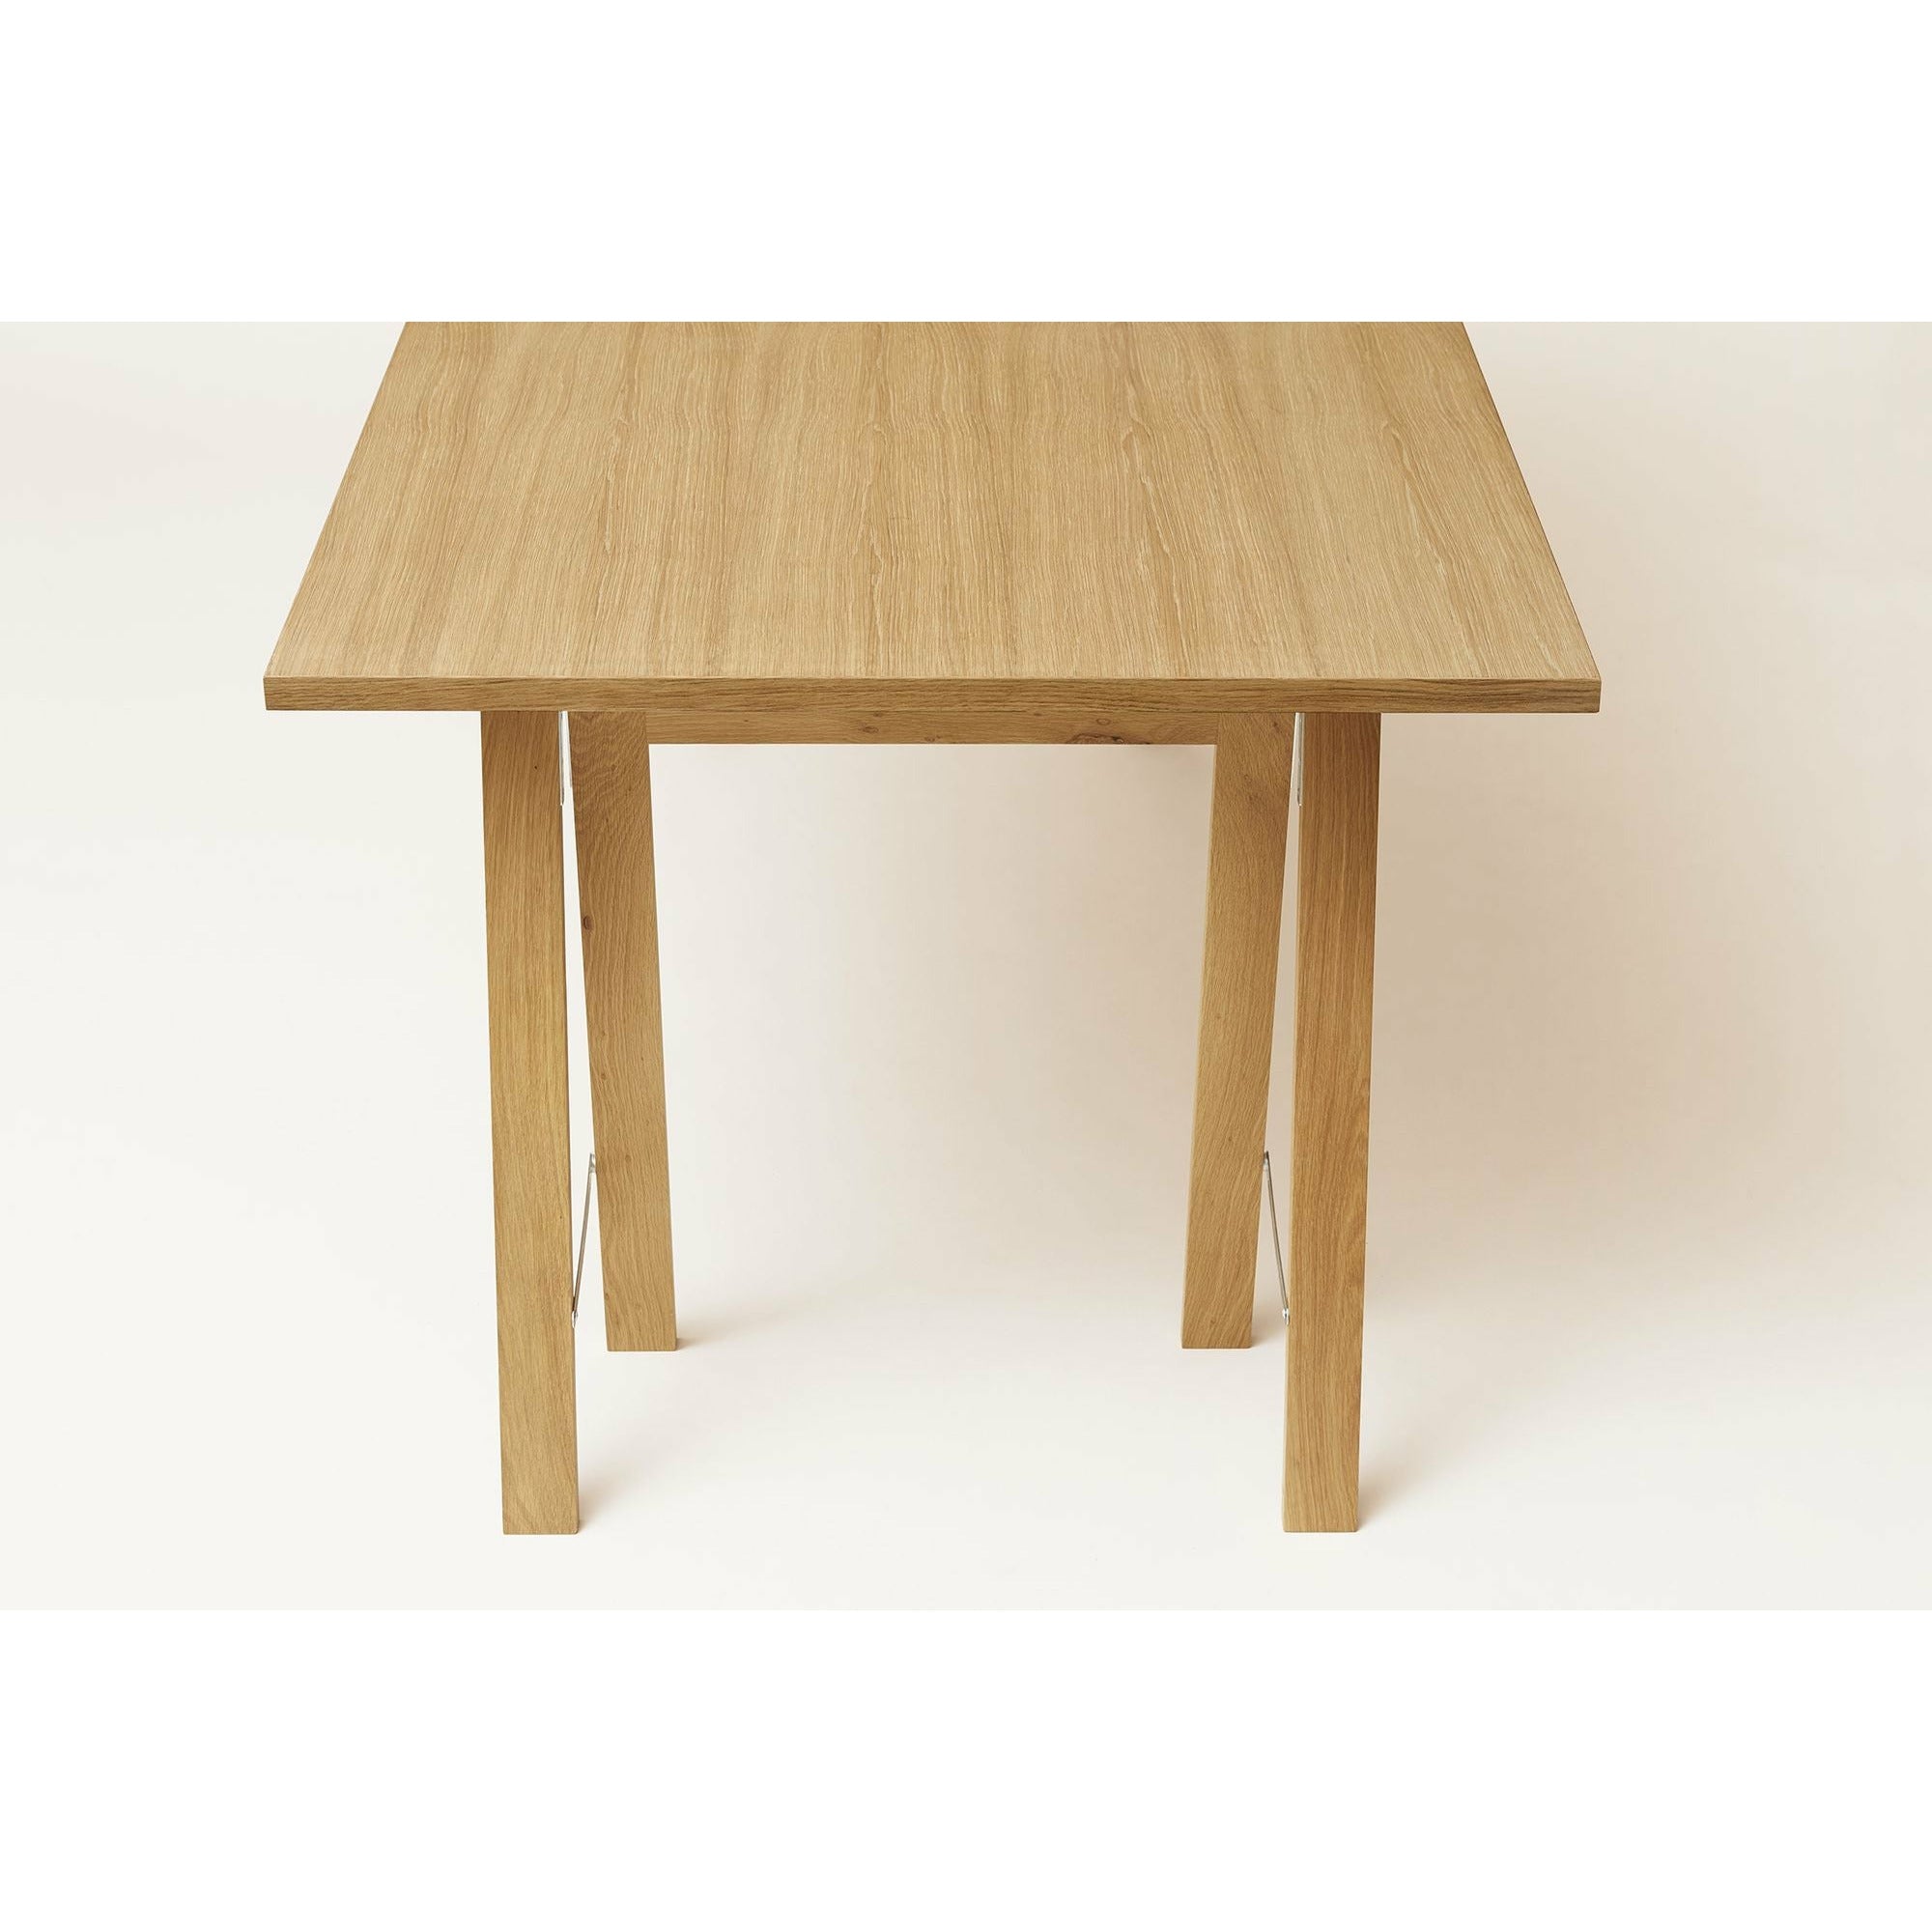 Form&Refine Linjär tabell topp 125x68 cm, ek